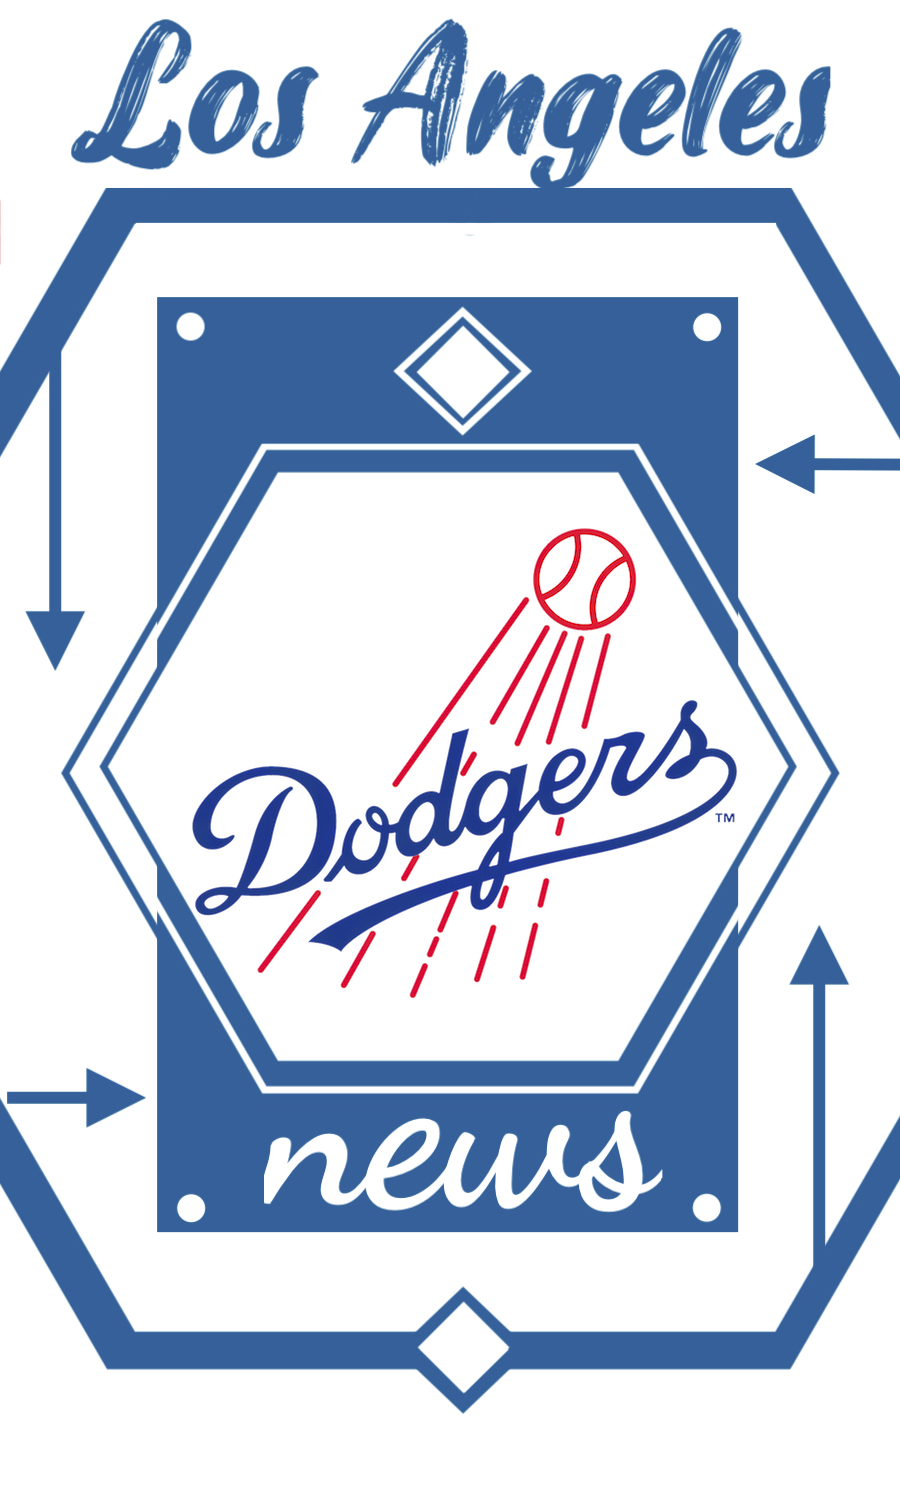 Dodgers News Update + Ed Sheeran to Headline at Blue Diamond Gala